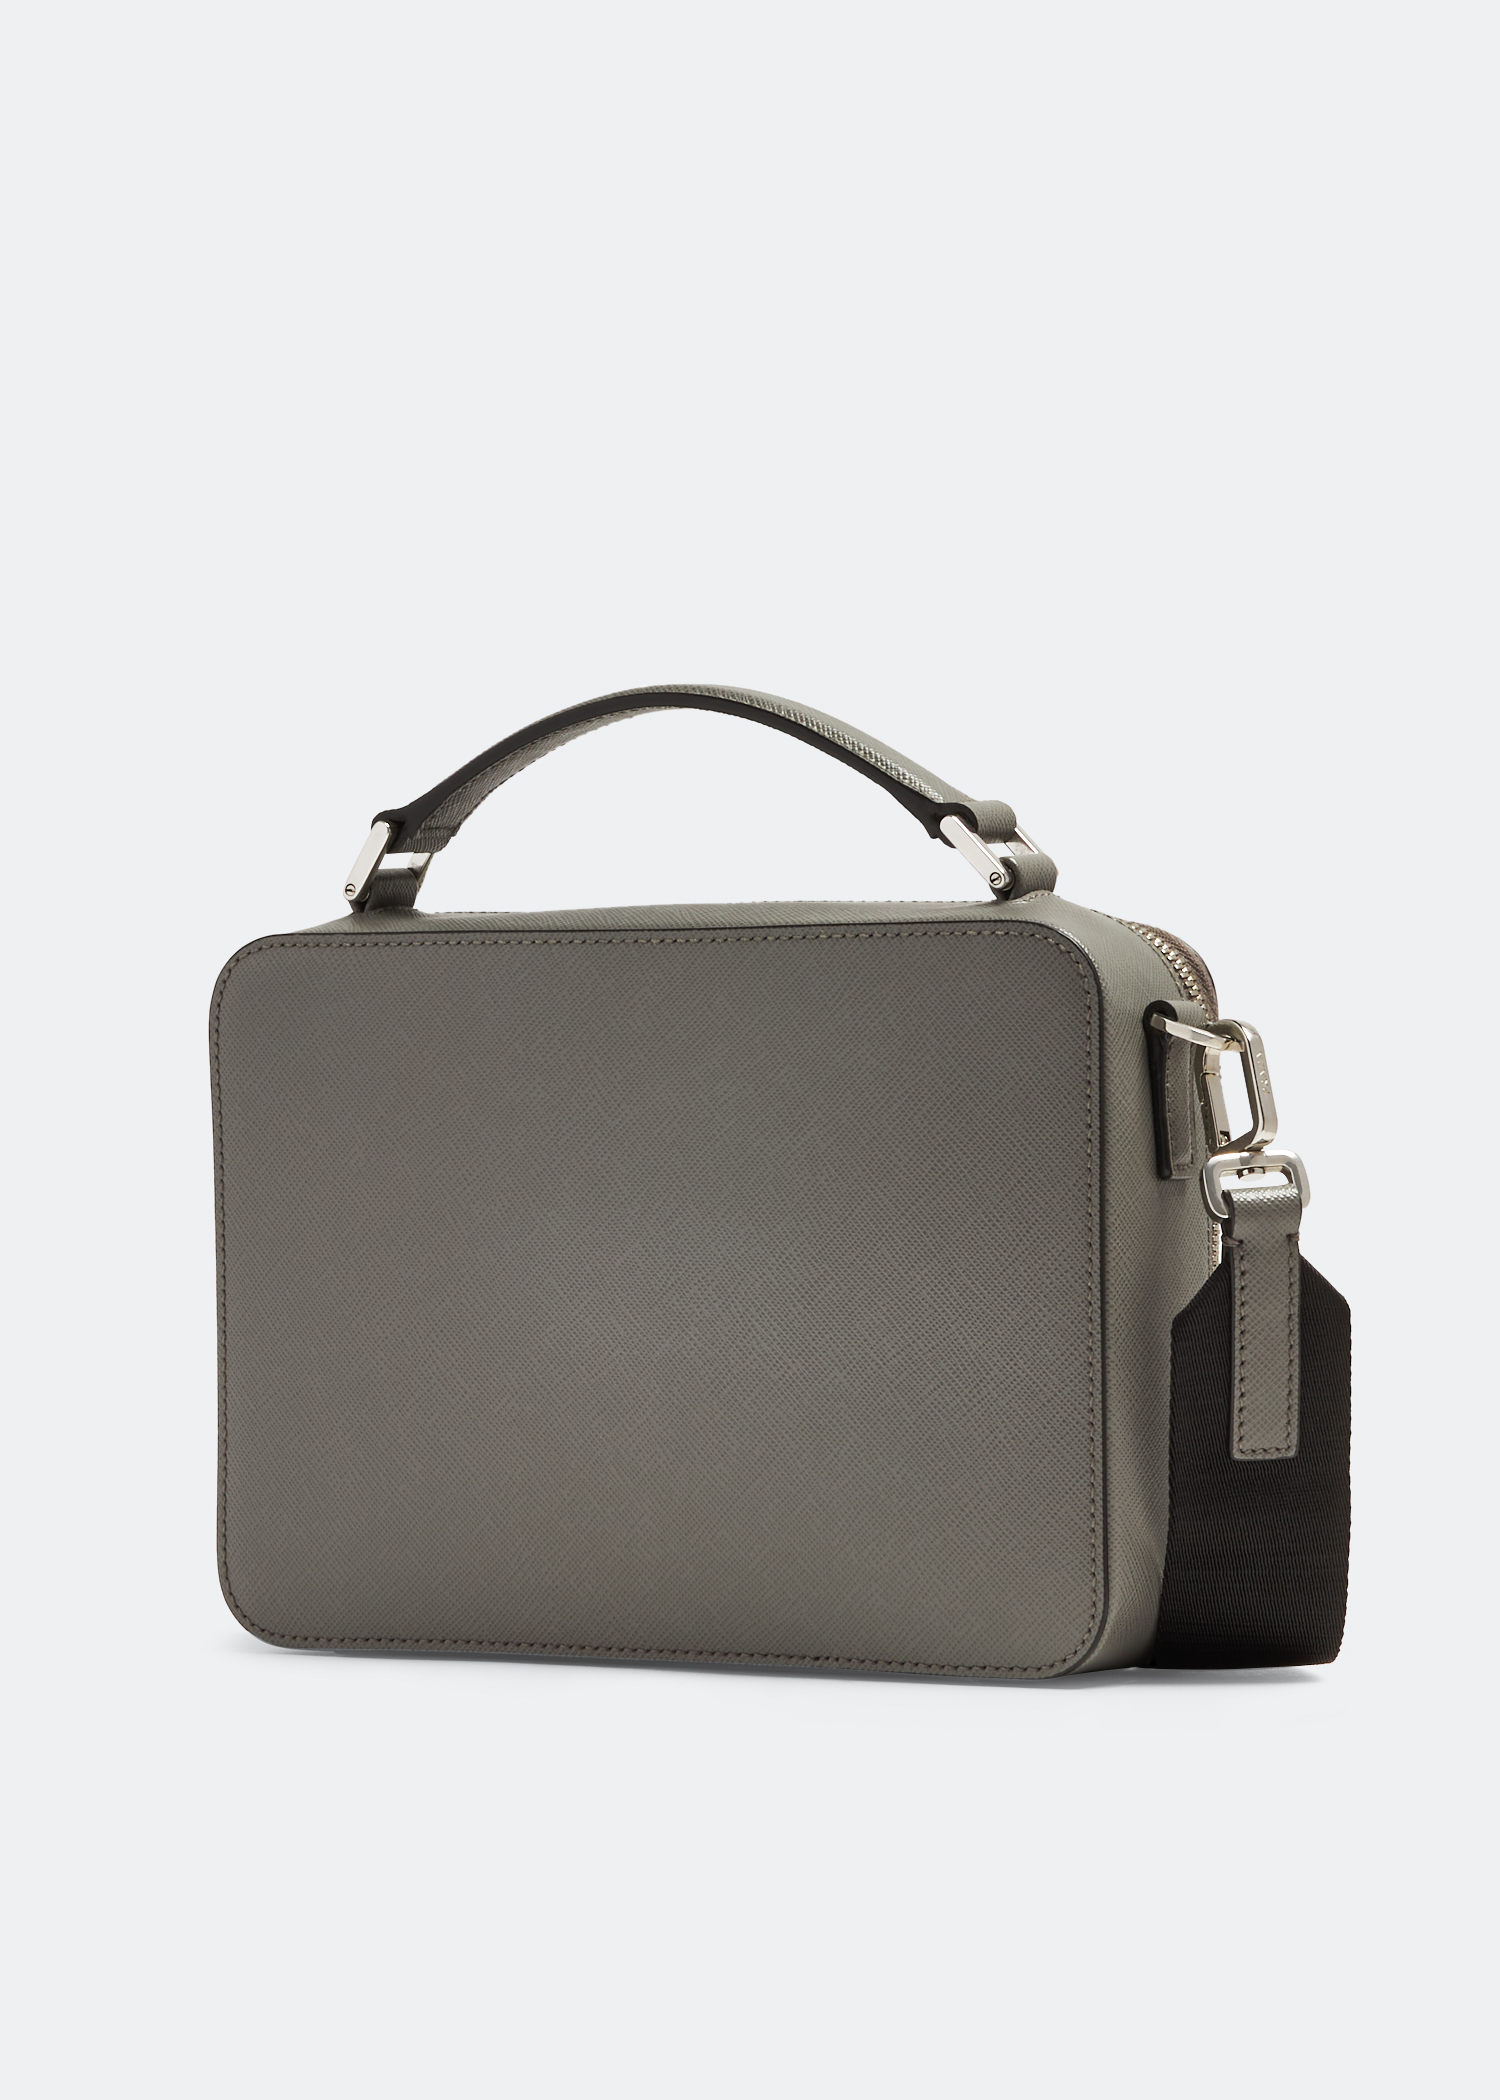 Prada Brique Saffiano leather medium bag for Men - Grey in KSA 